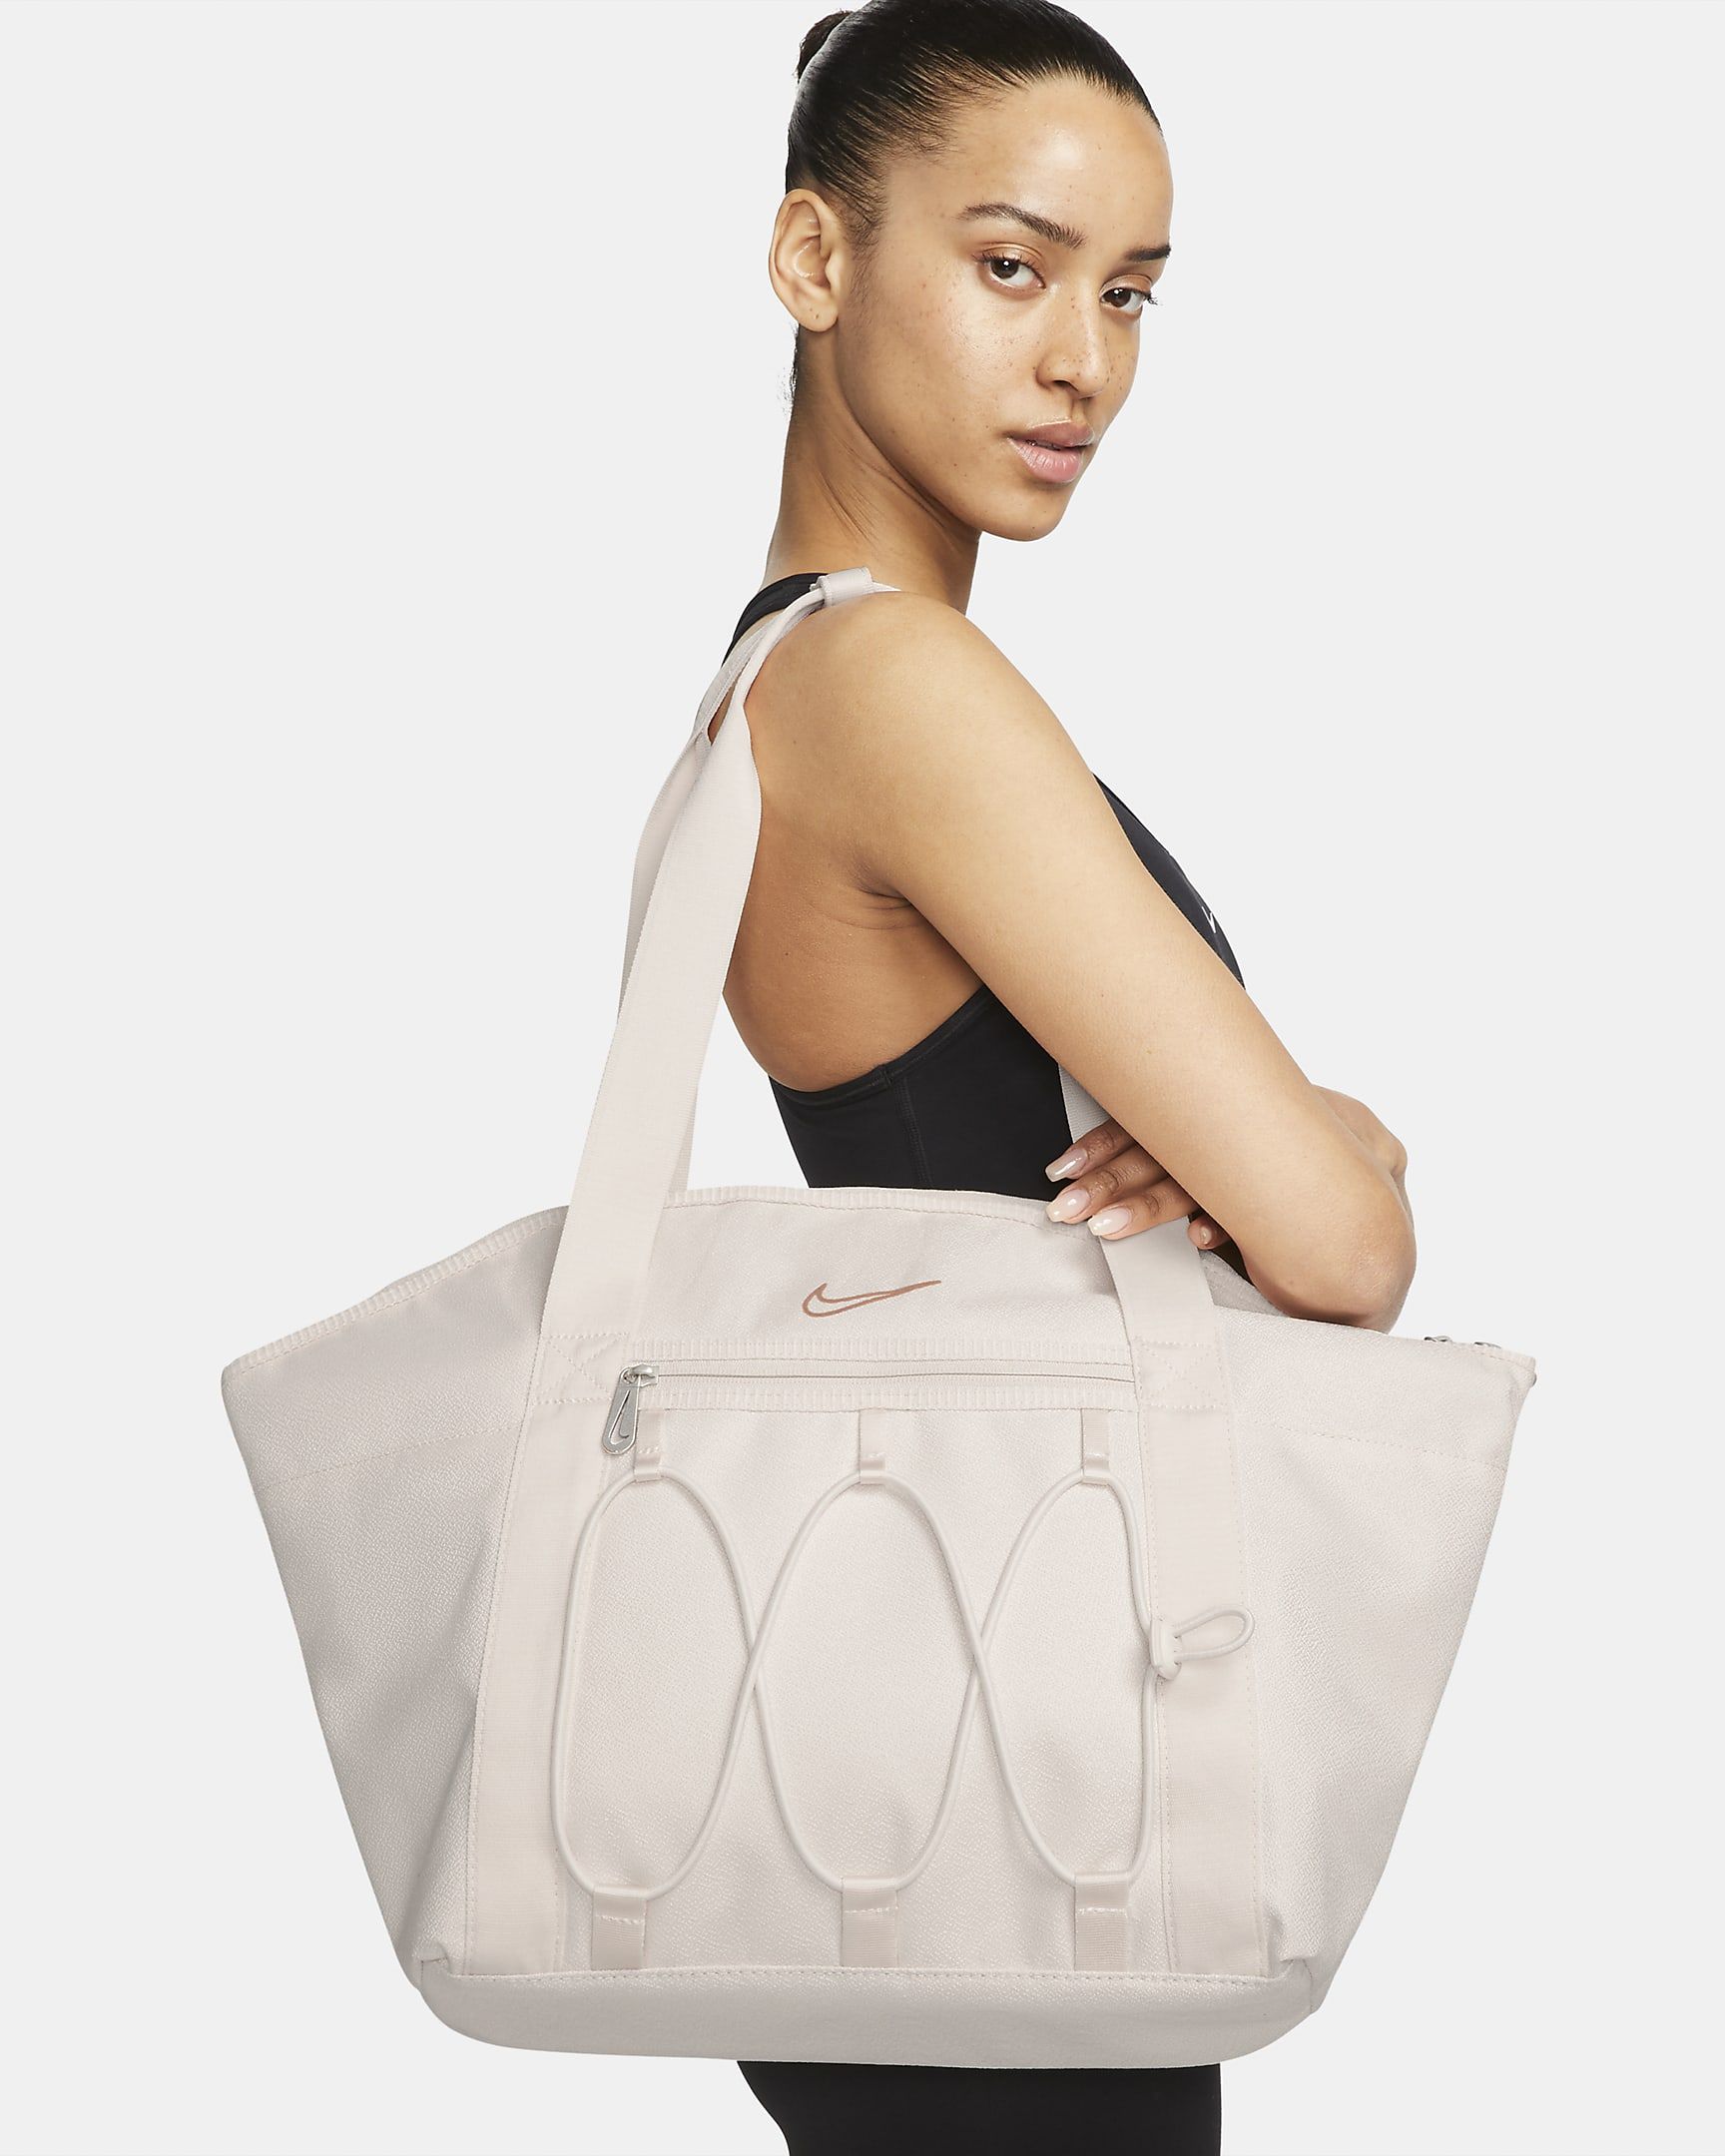 Nike One Women's Training Tote Bag (18L). Nike.com | Nike (US)